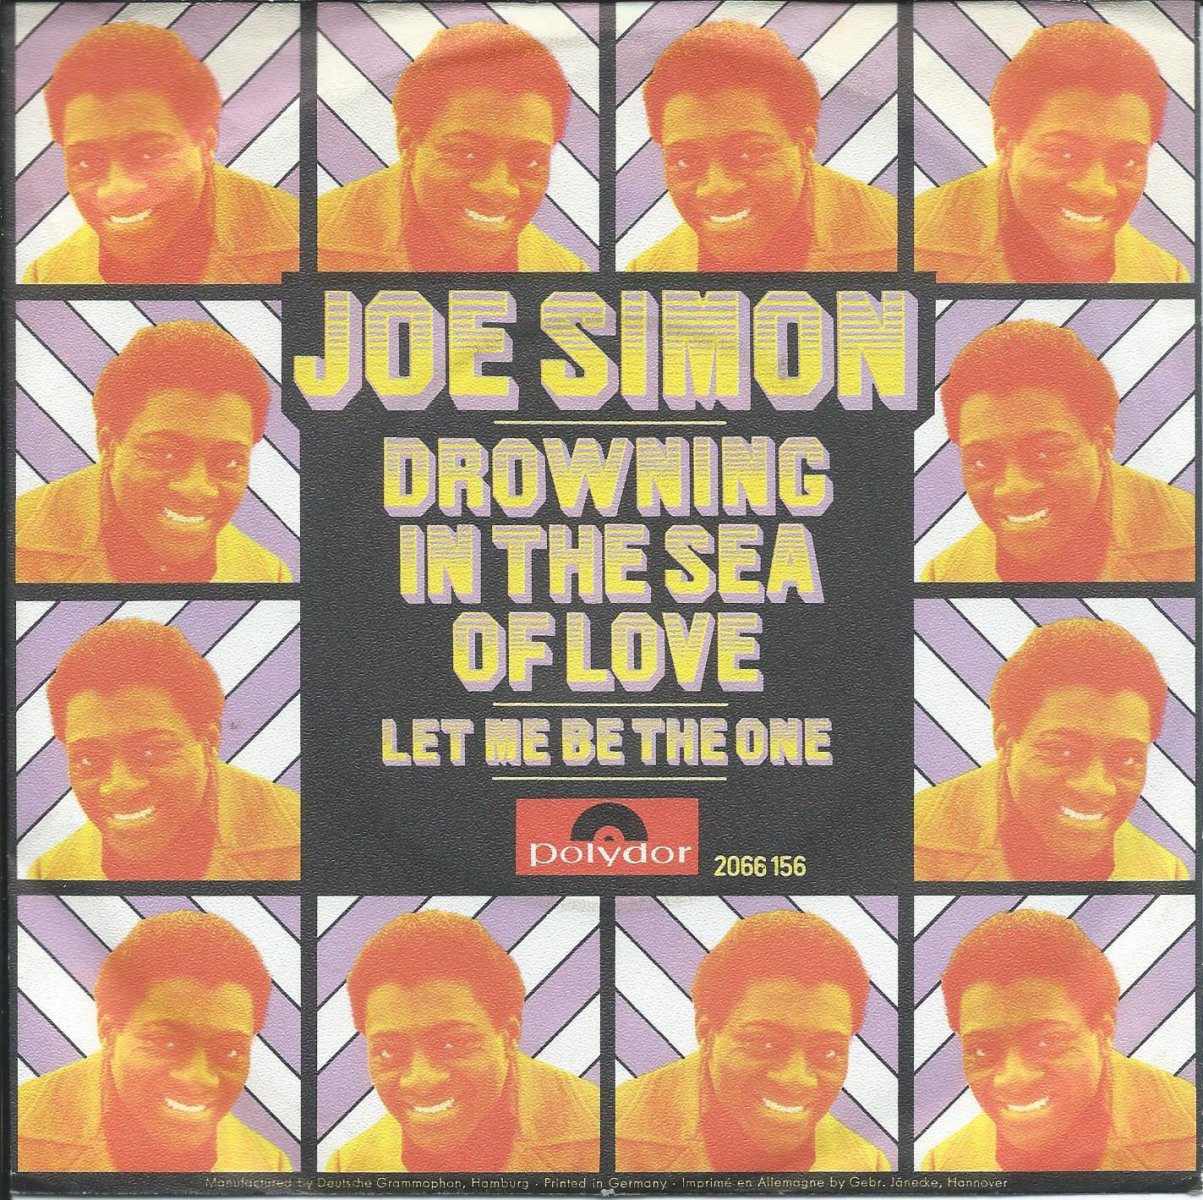 joe simon drowning in the sea of love rare